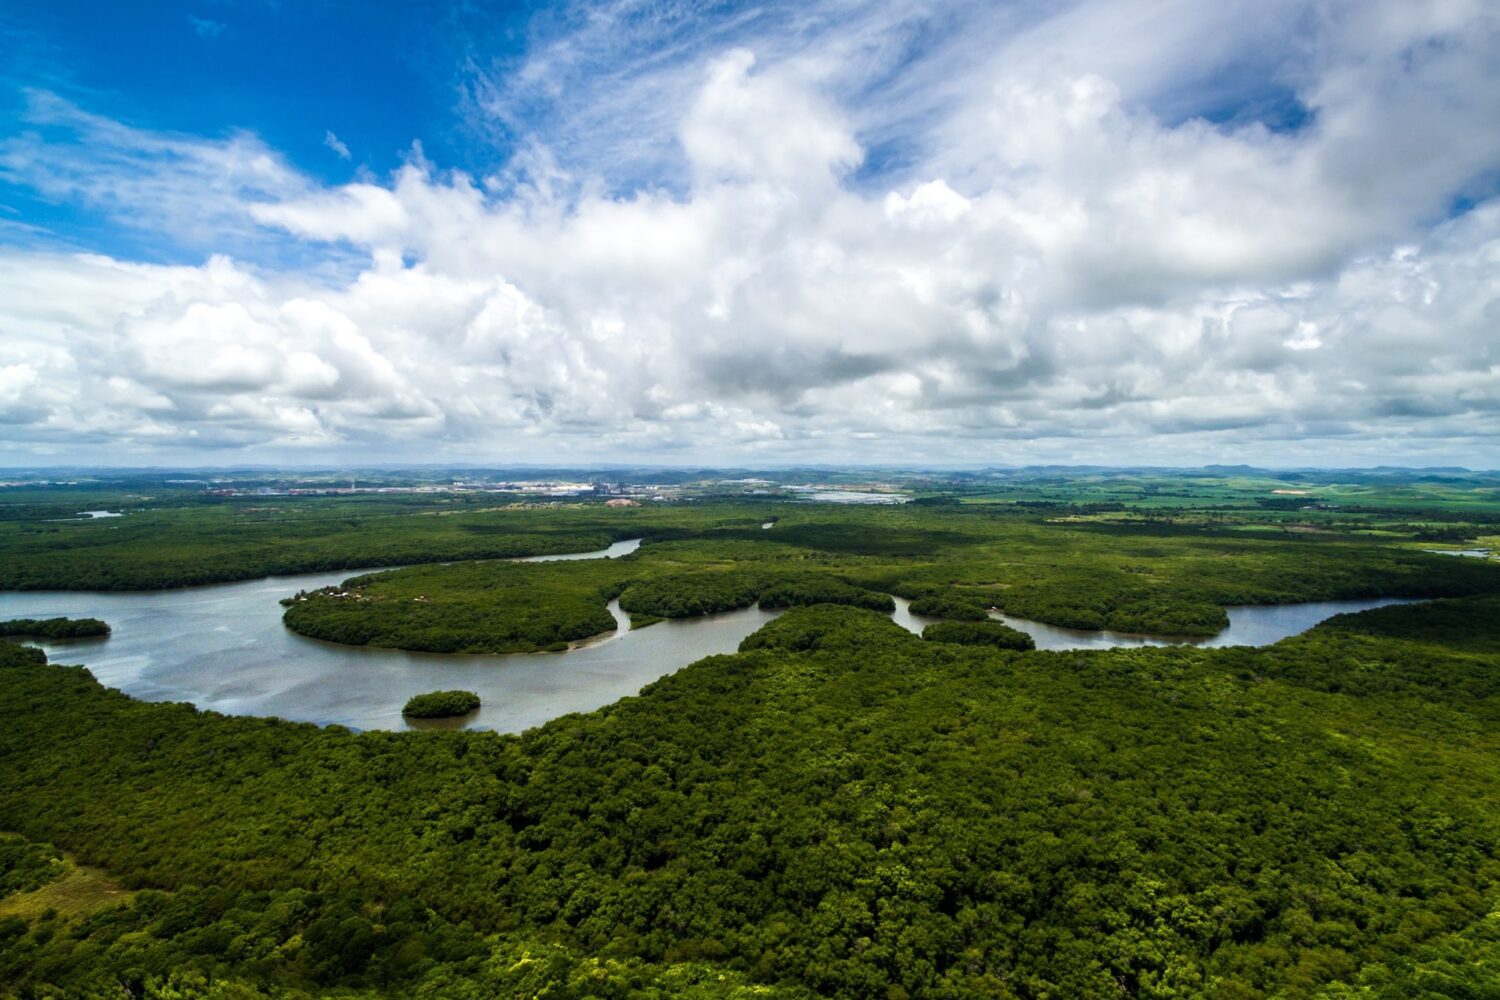 Plan turístico al Amazonas